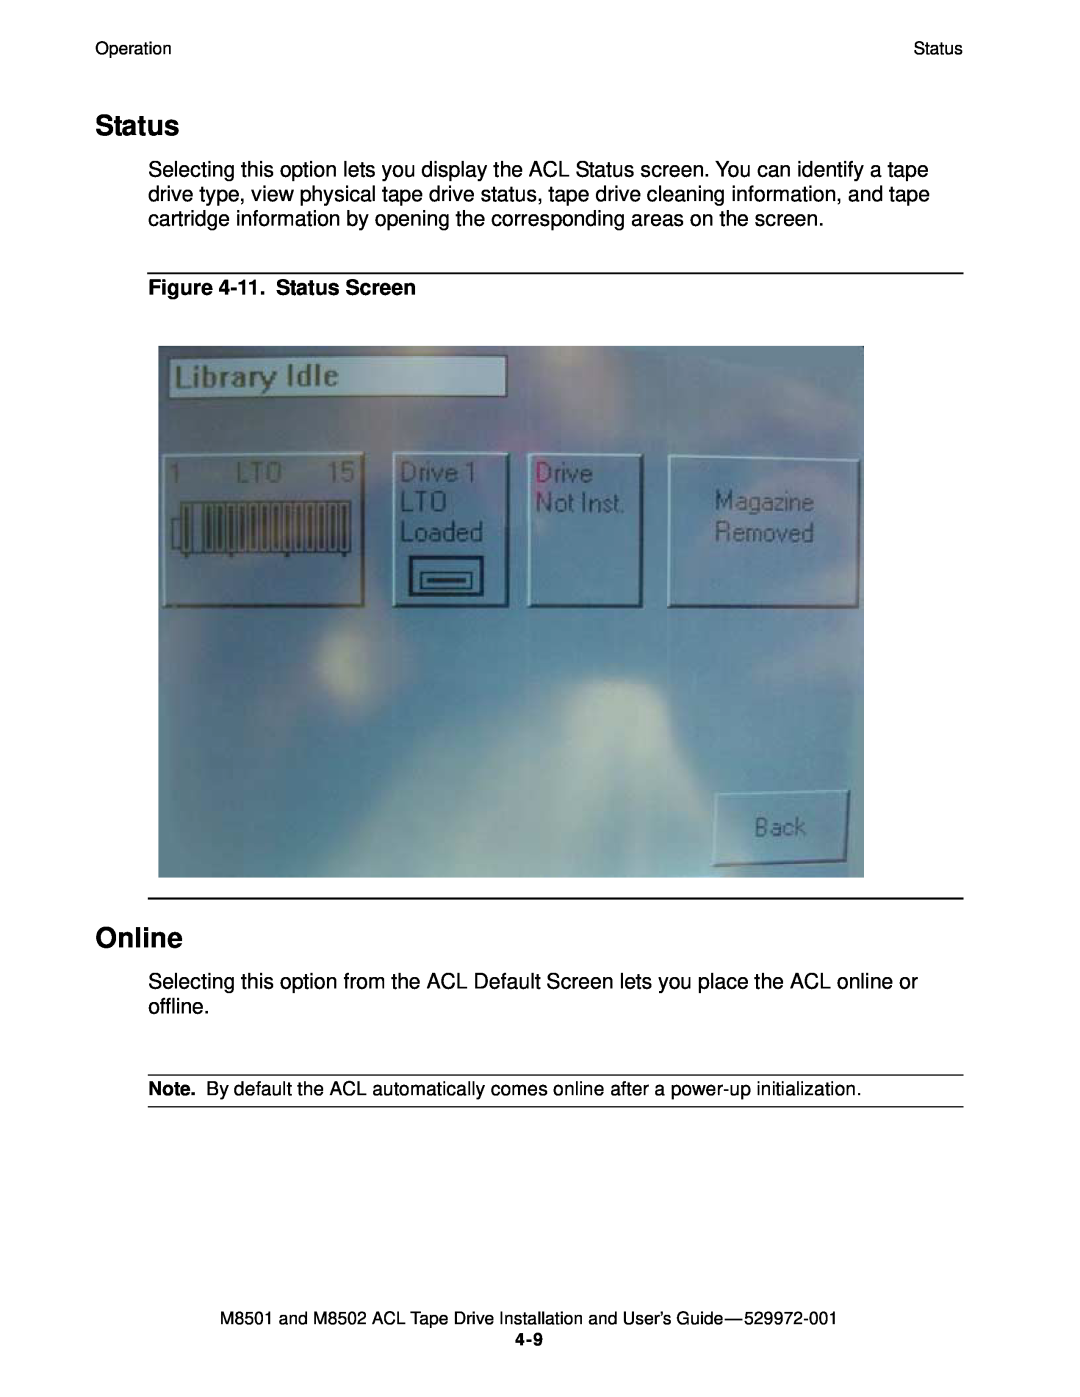 SMC Networks M8501 manual Online, 11. Status Screen 